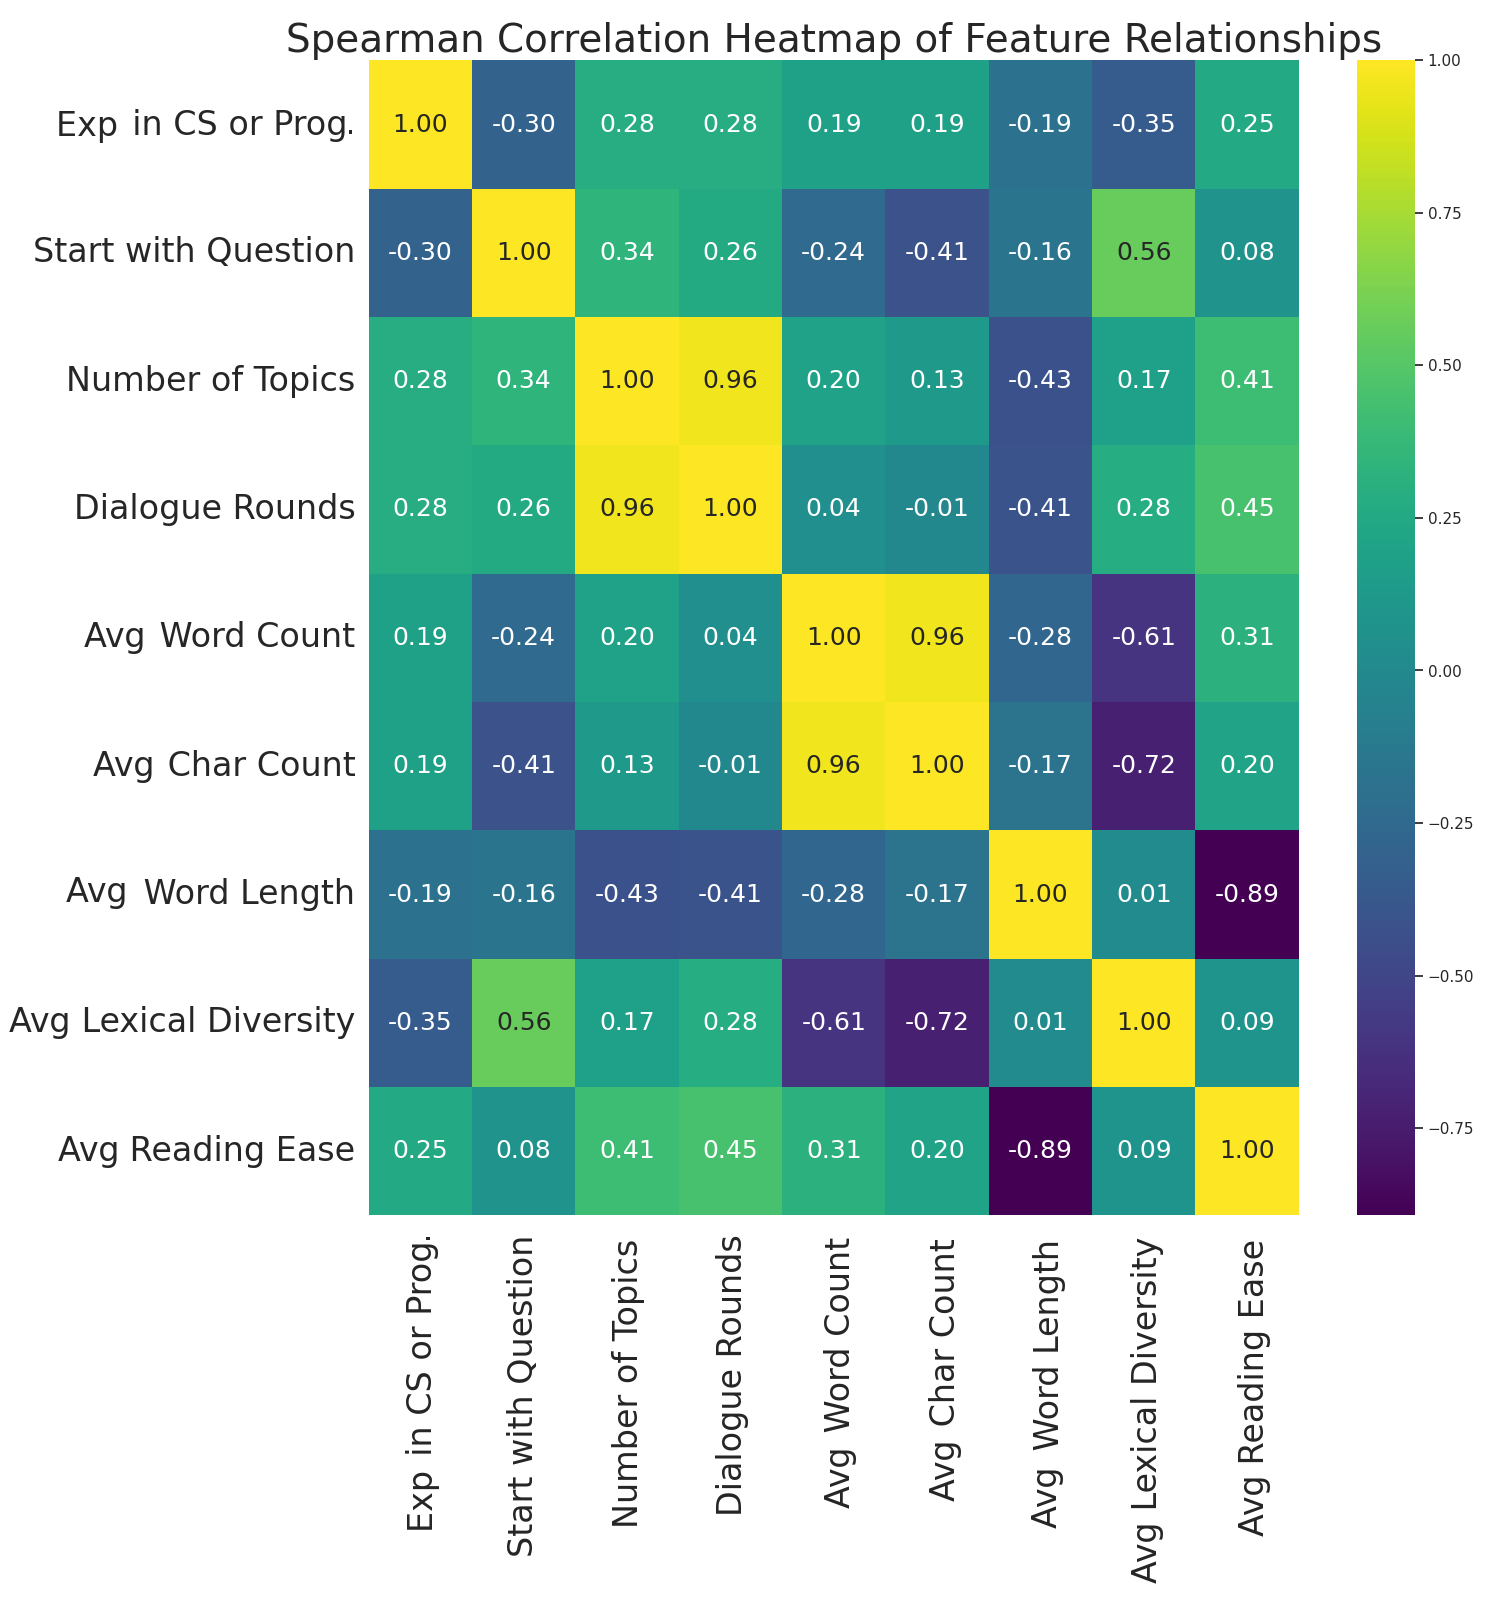 Spearman Correlation Heatmap: Influence of CS Programming Experience on Dialogue Features